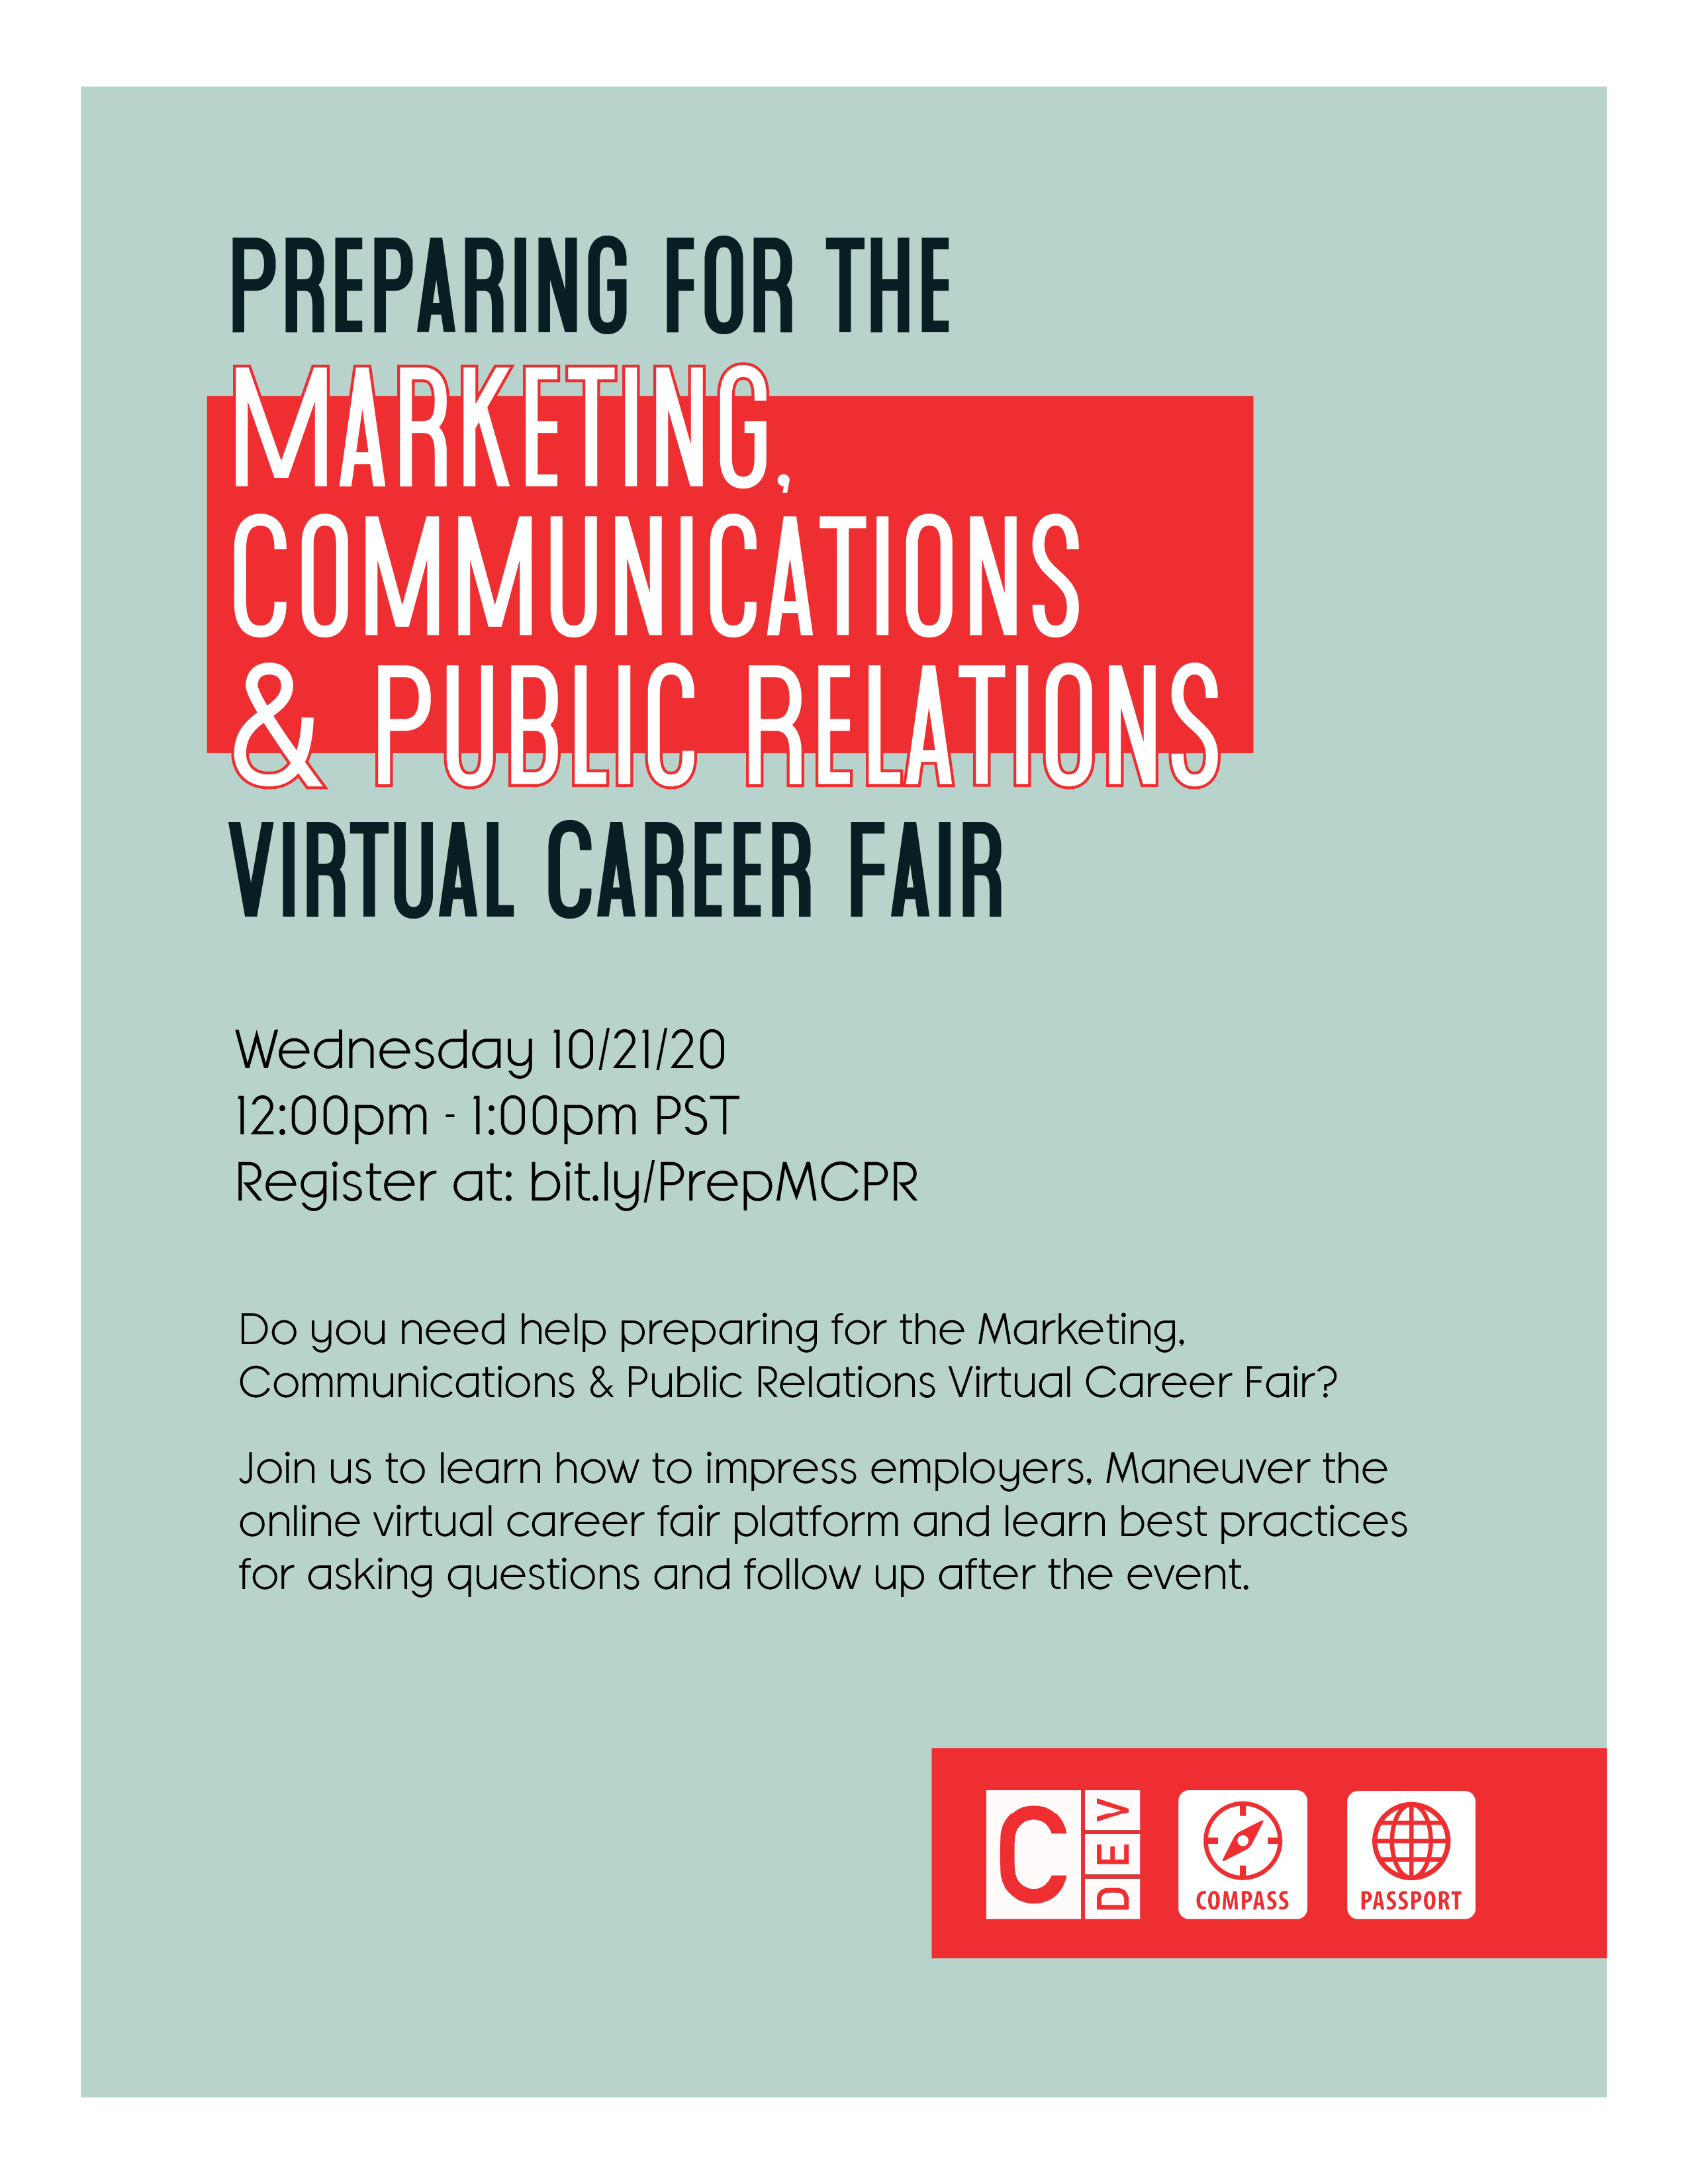 Preparing for the Marketing, Communications & Public Relations Virtual Career Fair flyer